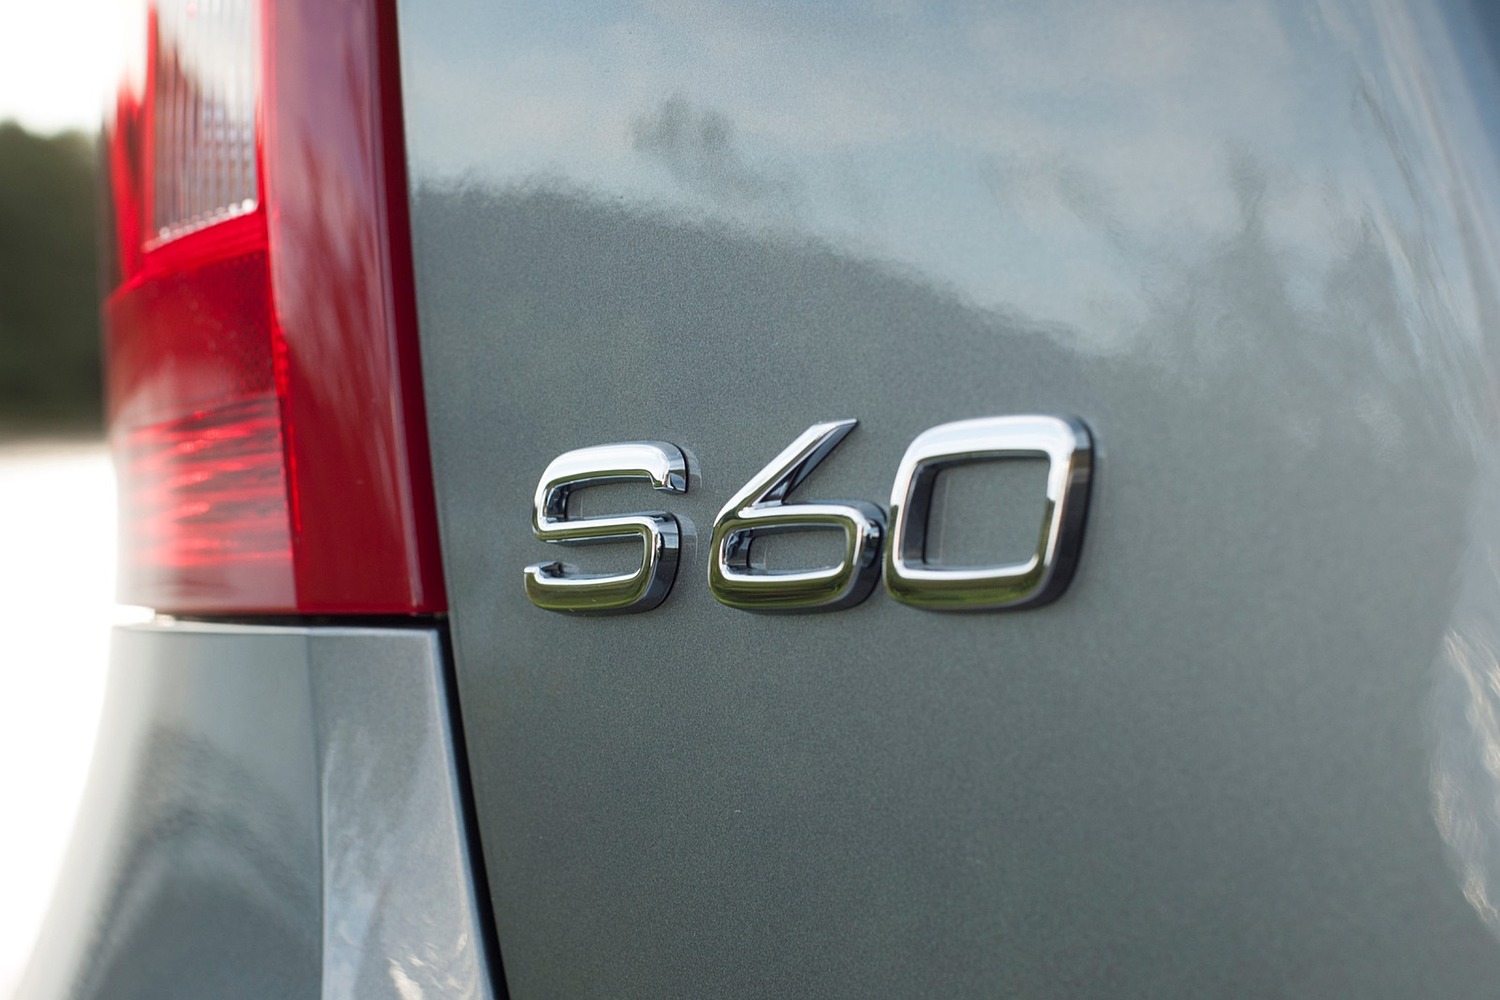 Volvo S60 T5 Dynamic Sedan Rear Badge (2017 model year shown)